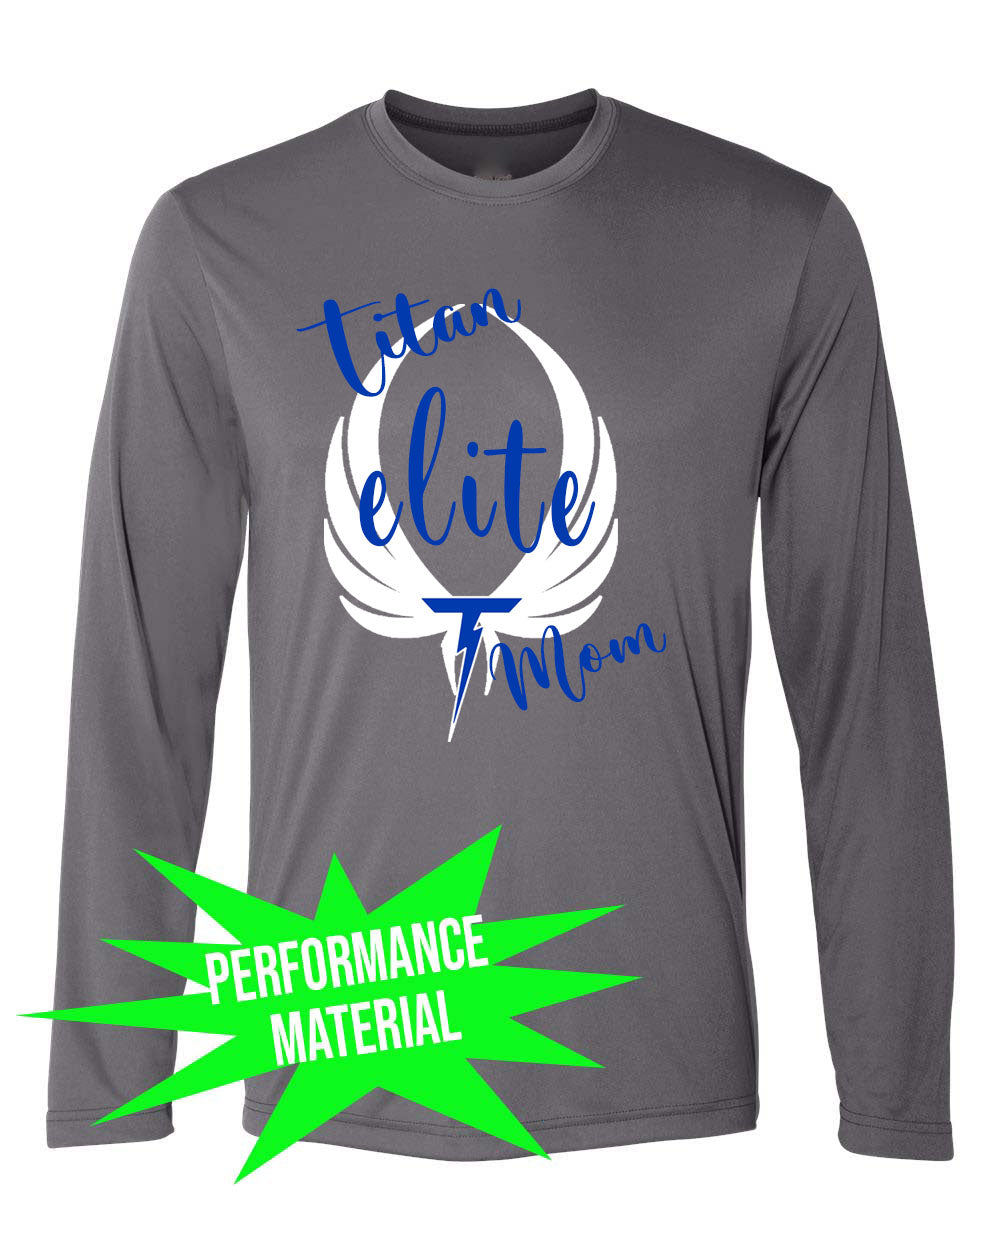 Titan Performance Material Design 15 Long Sleeve Shirt